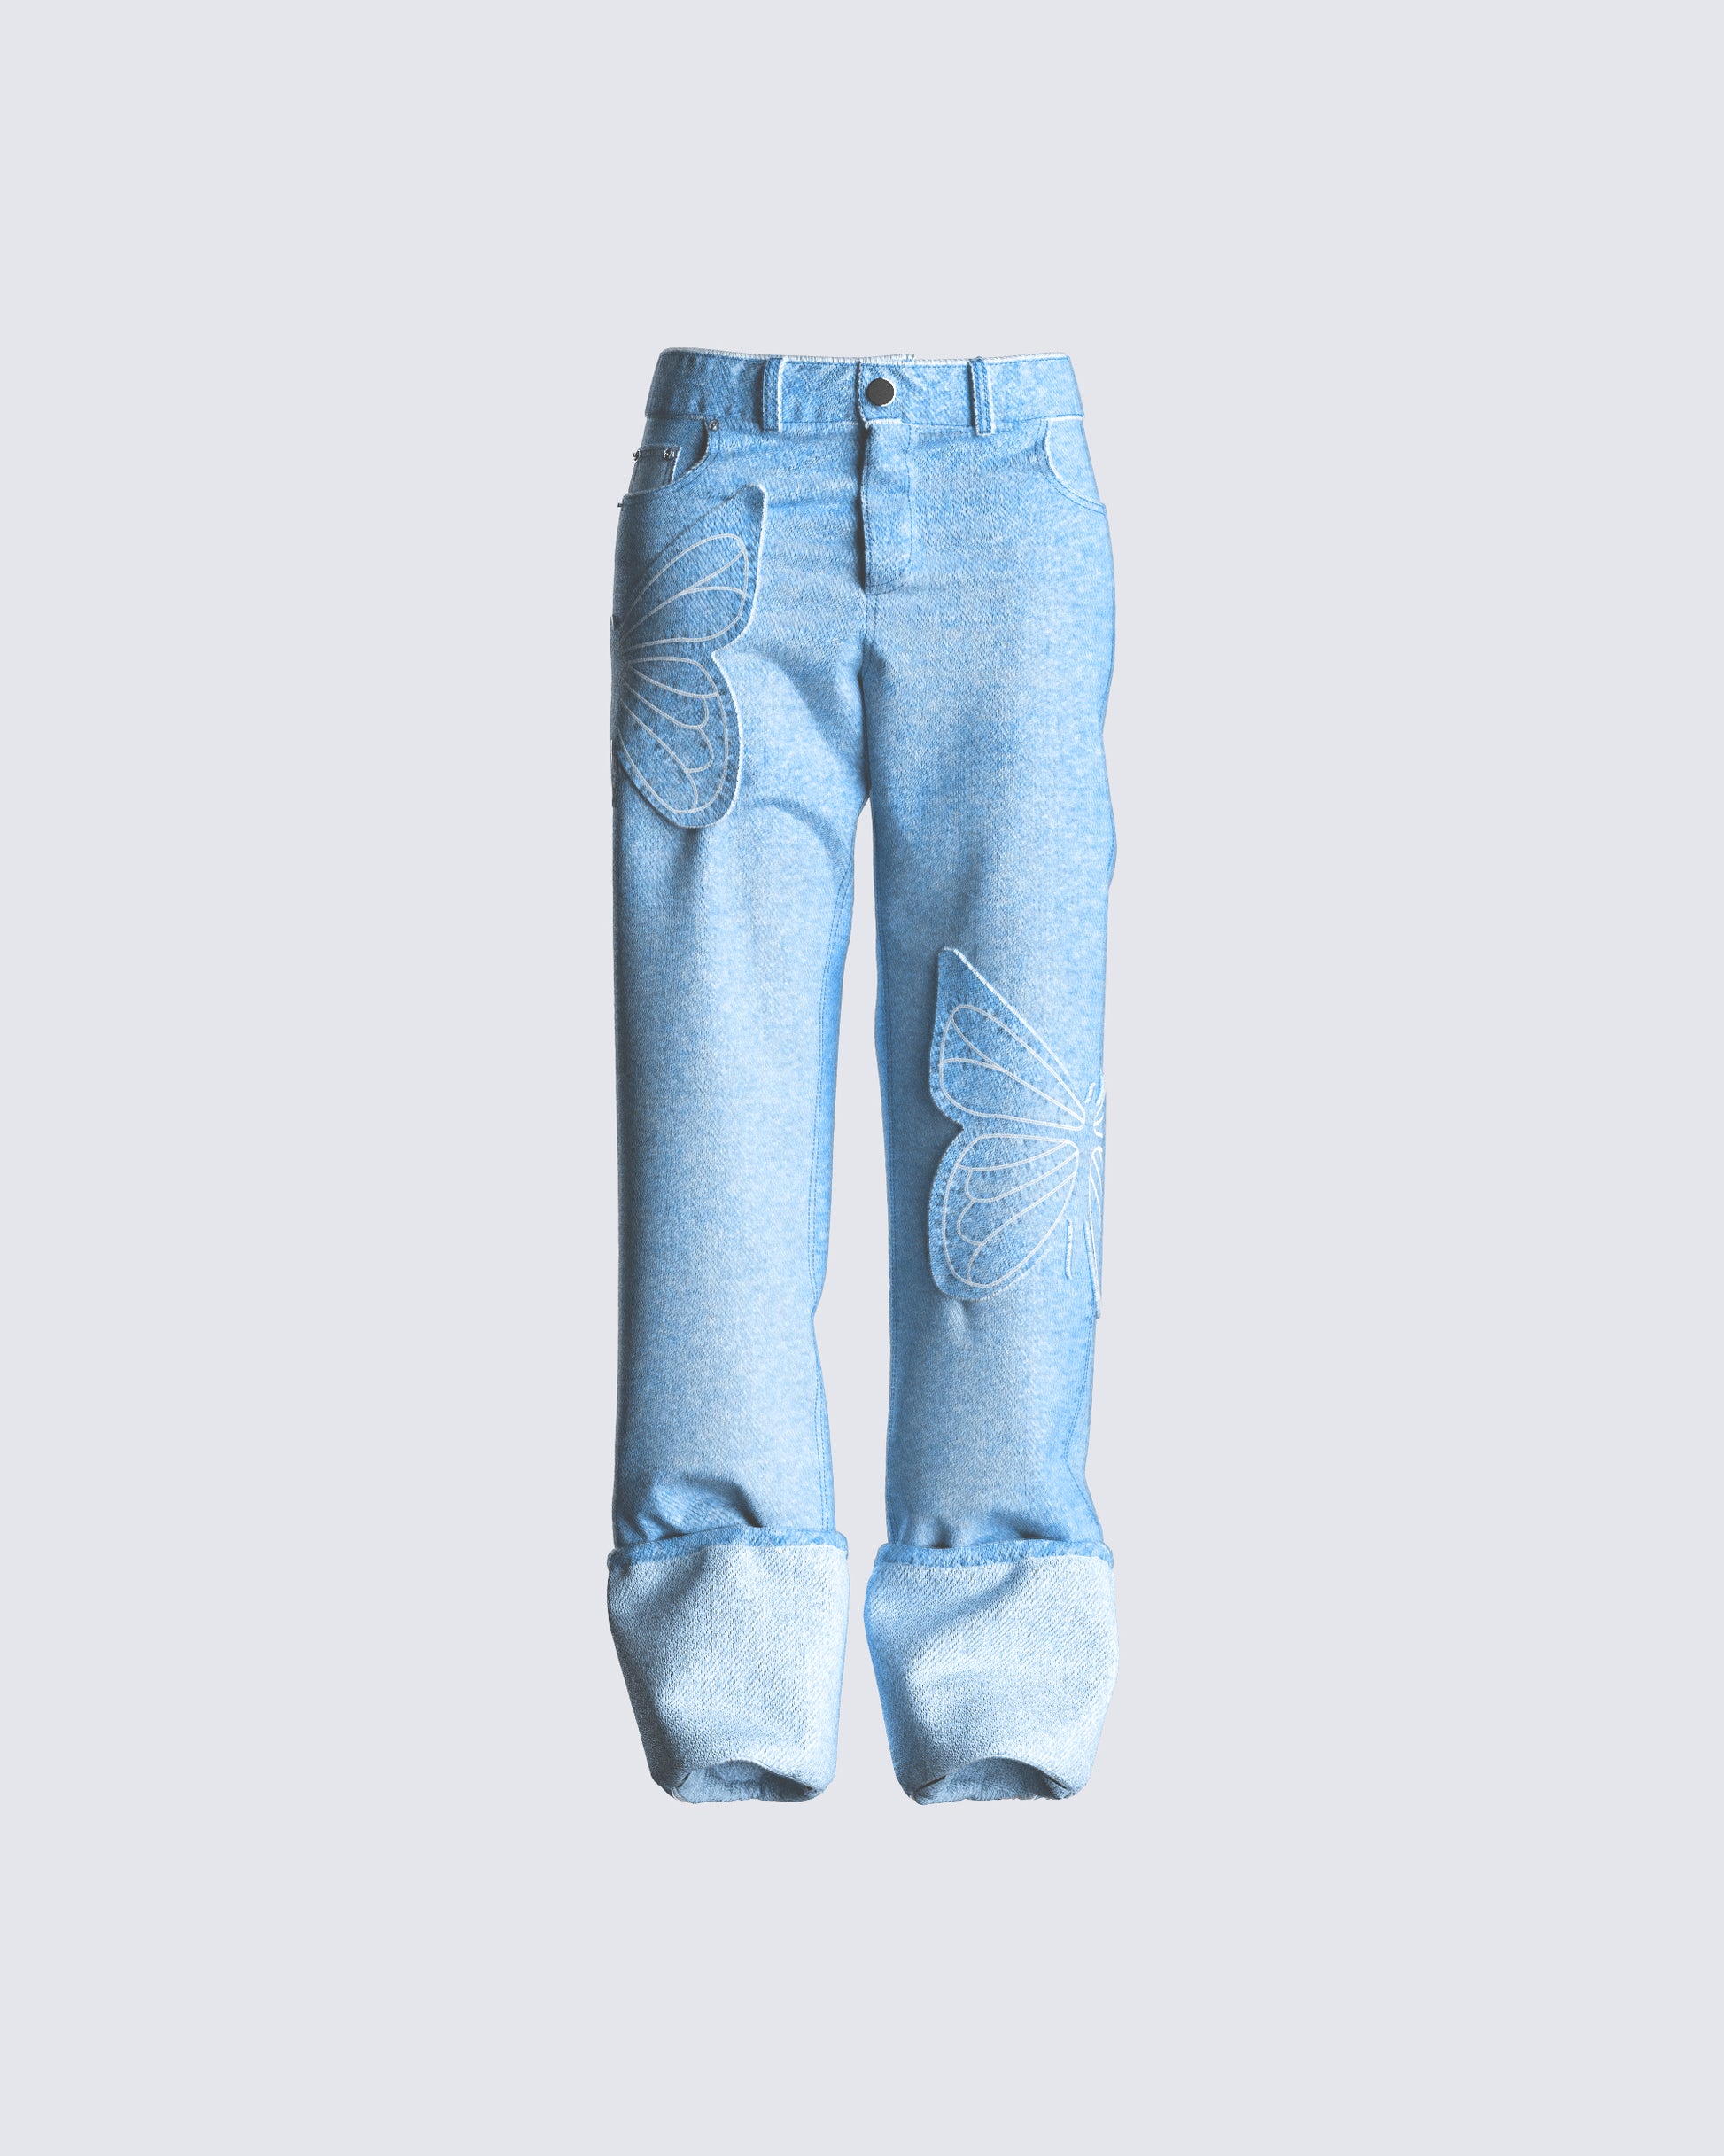 Sebuysun Simple Blue Denim Pants Skinny Jeans Women Summer Capris